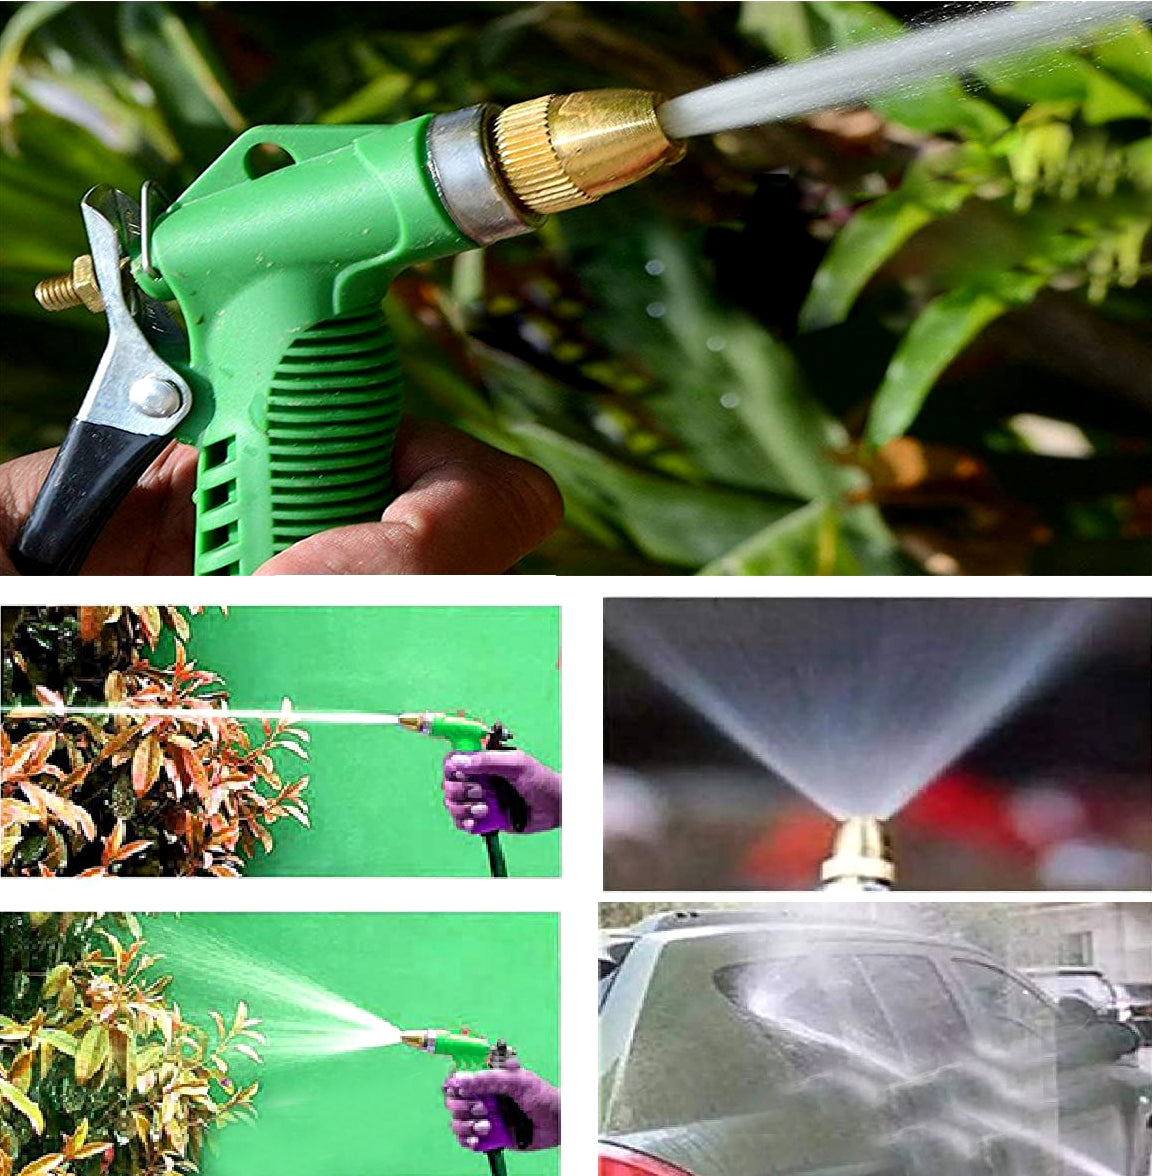 Casa De Amor Hose Nozzle Water Spray Gun with Water Flow Control Valve Lever Spray for Gardening Watering Plants Wash Car Bike Lawn